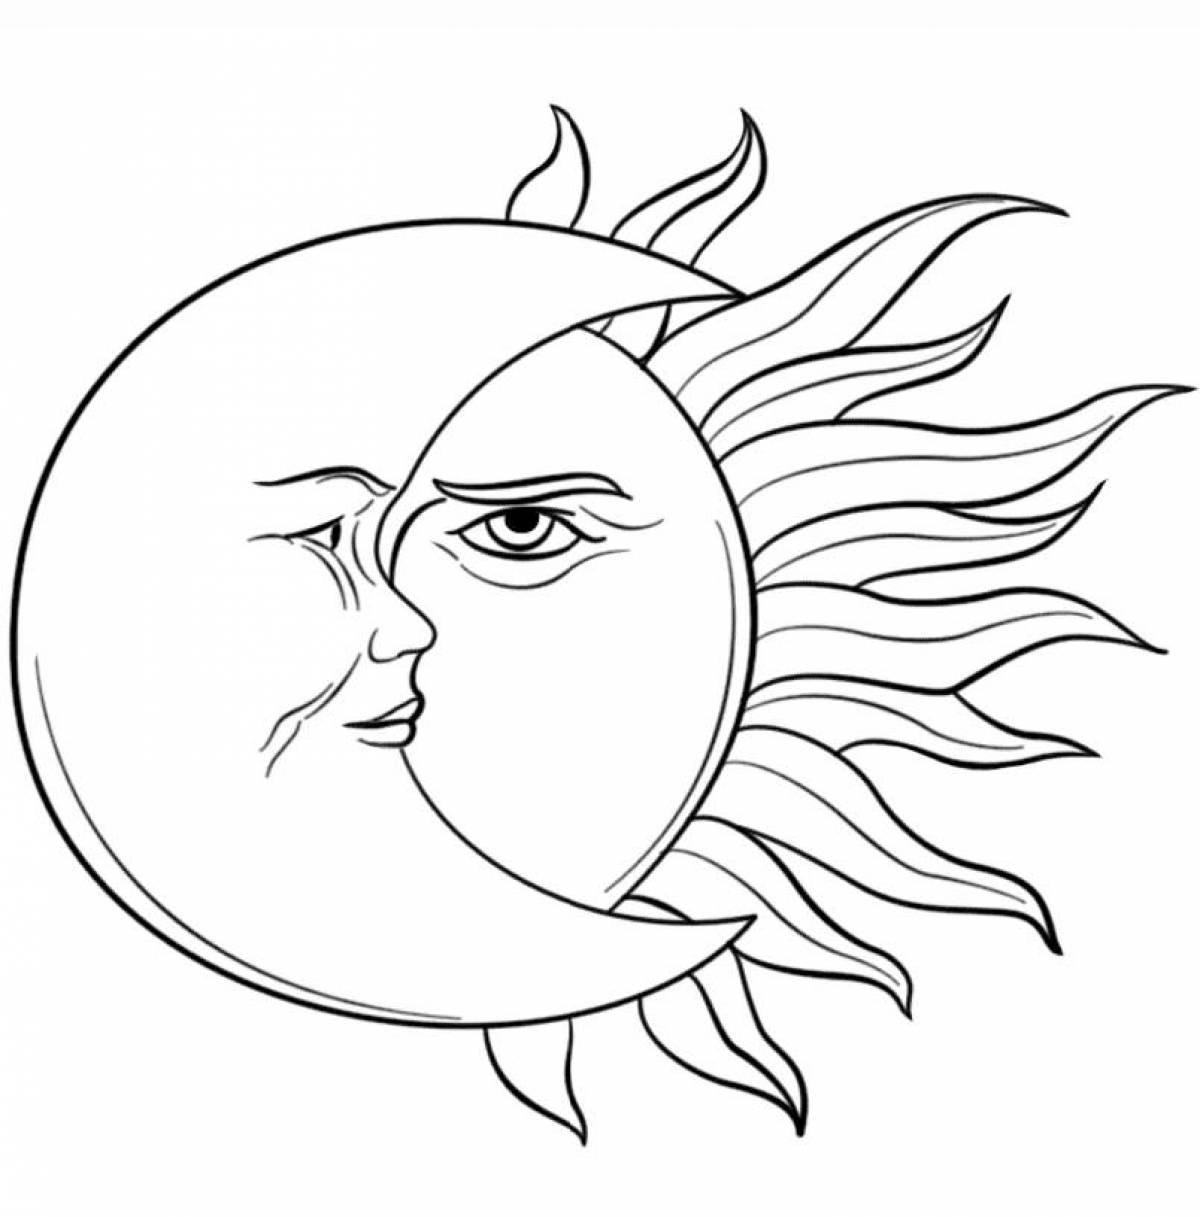 Раскраска Солнце | Раскраски для детей: 12 разукрашек